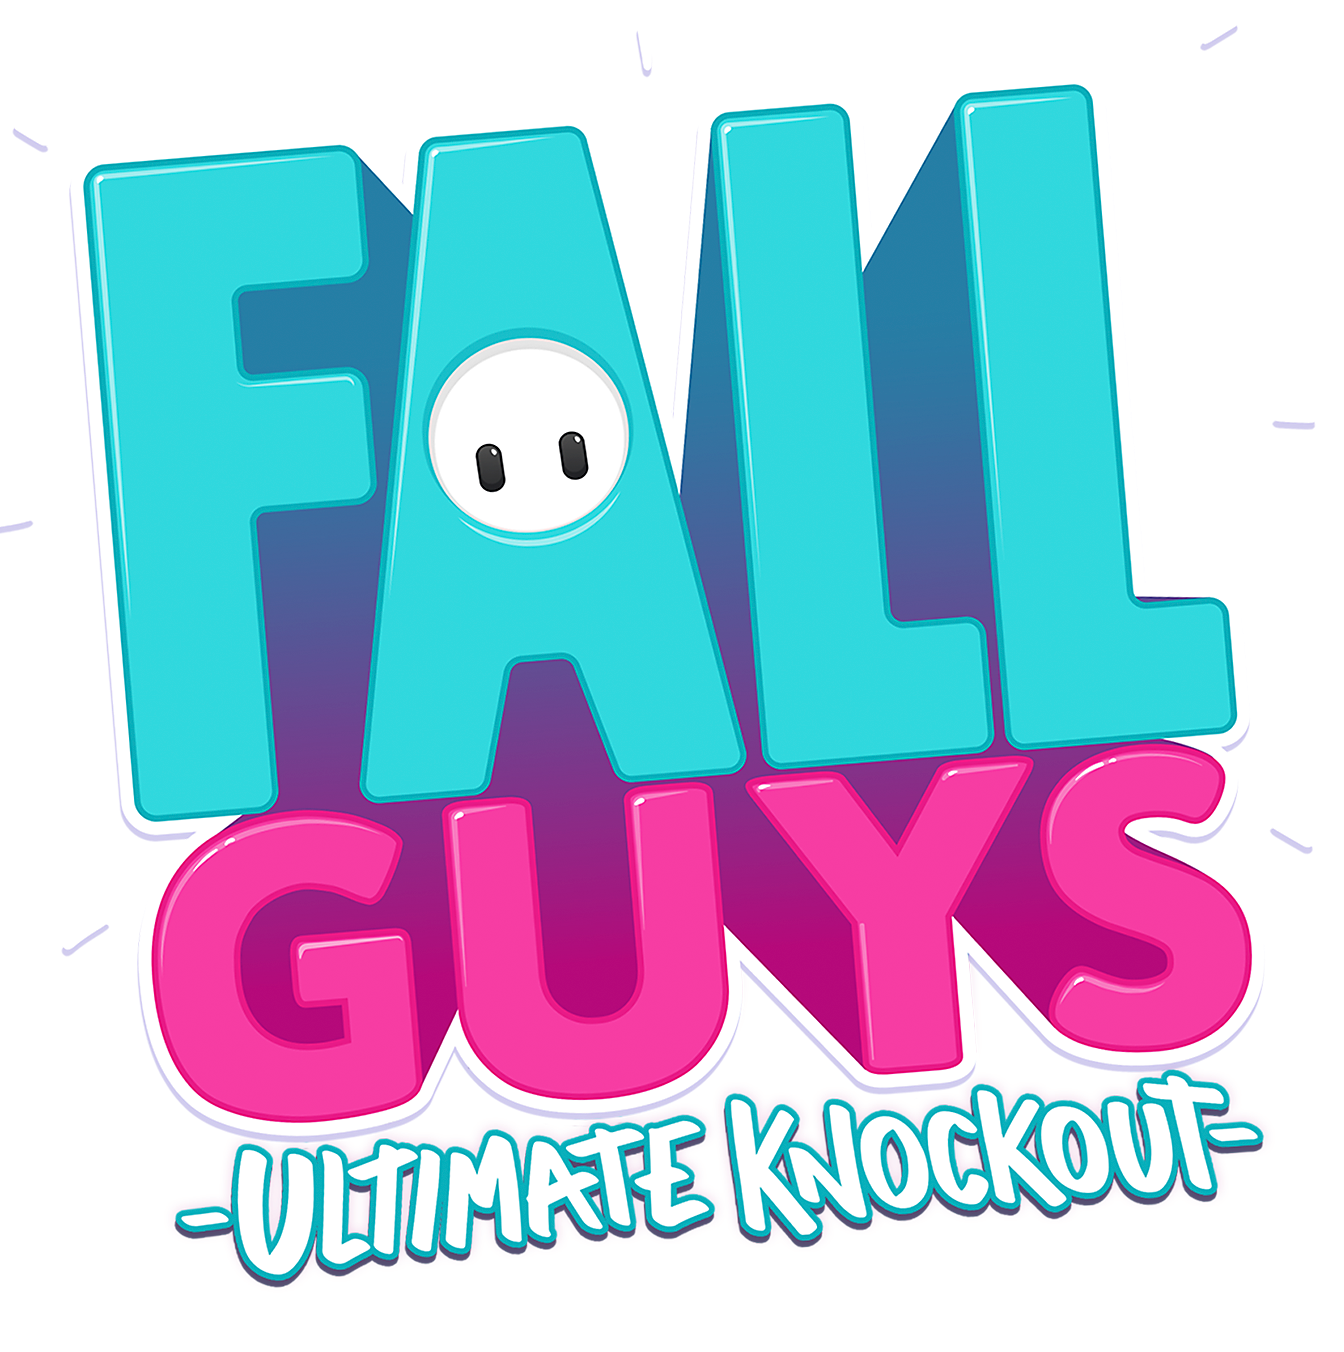 Fall Guys - Fall Guys: Ultimate Knockout Wiki